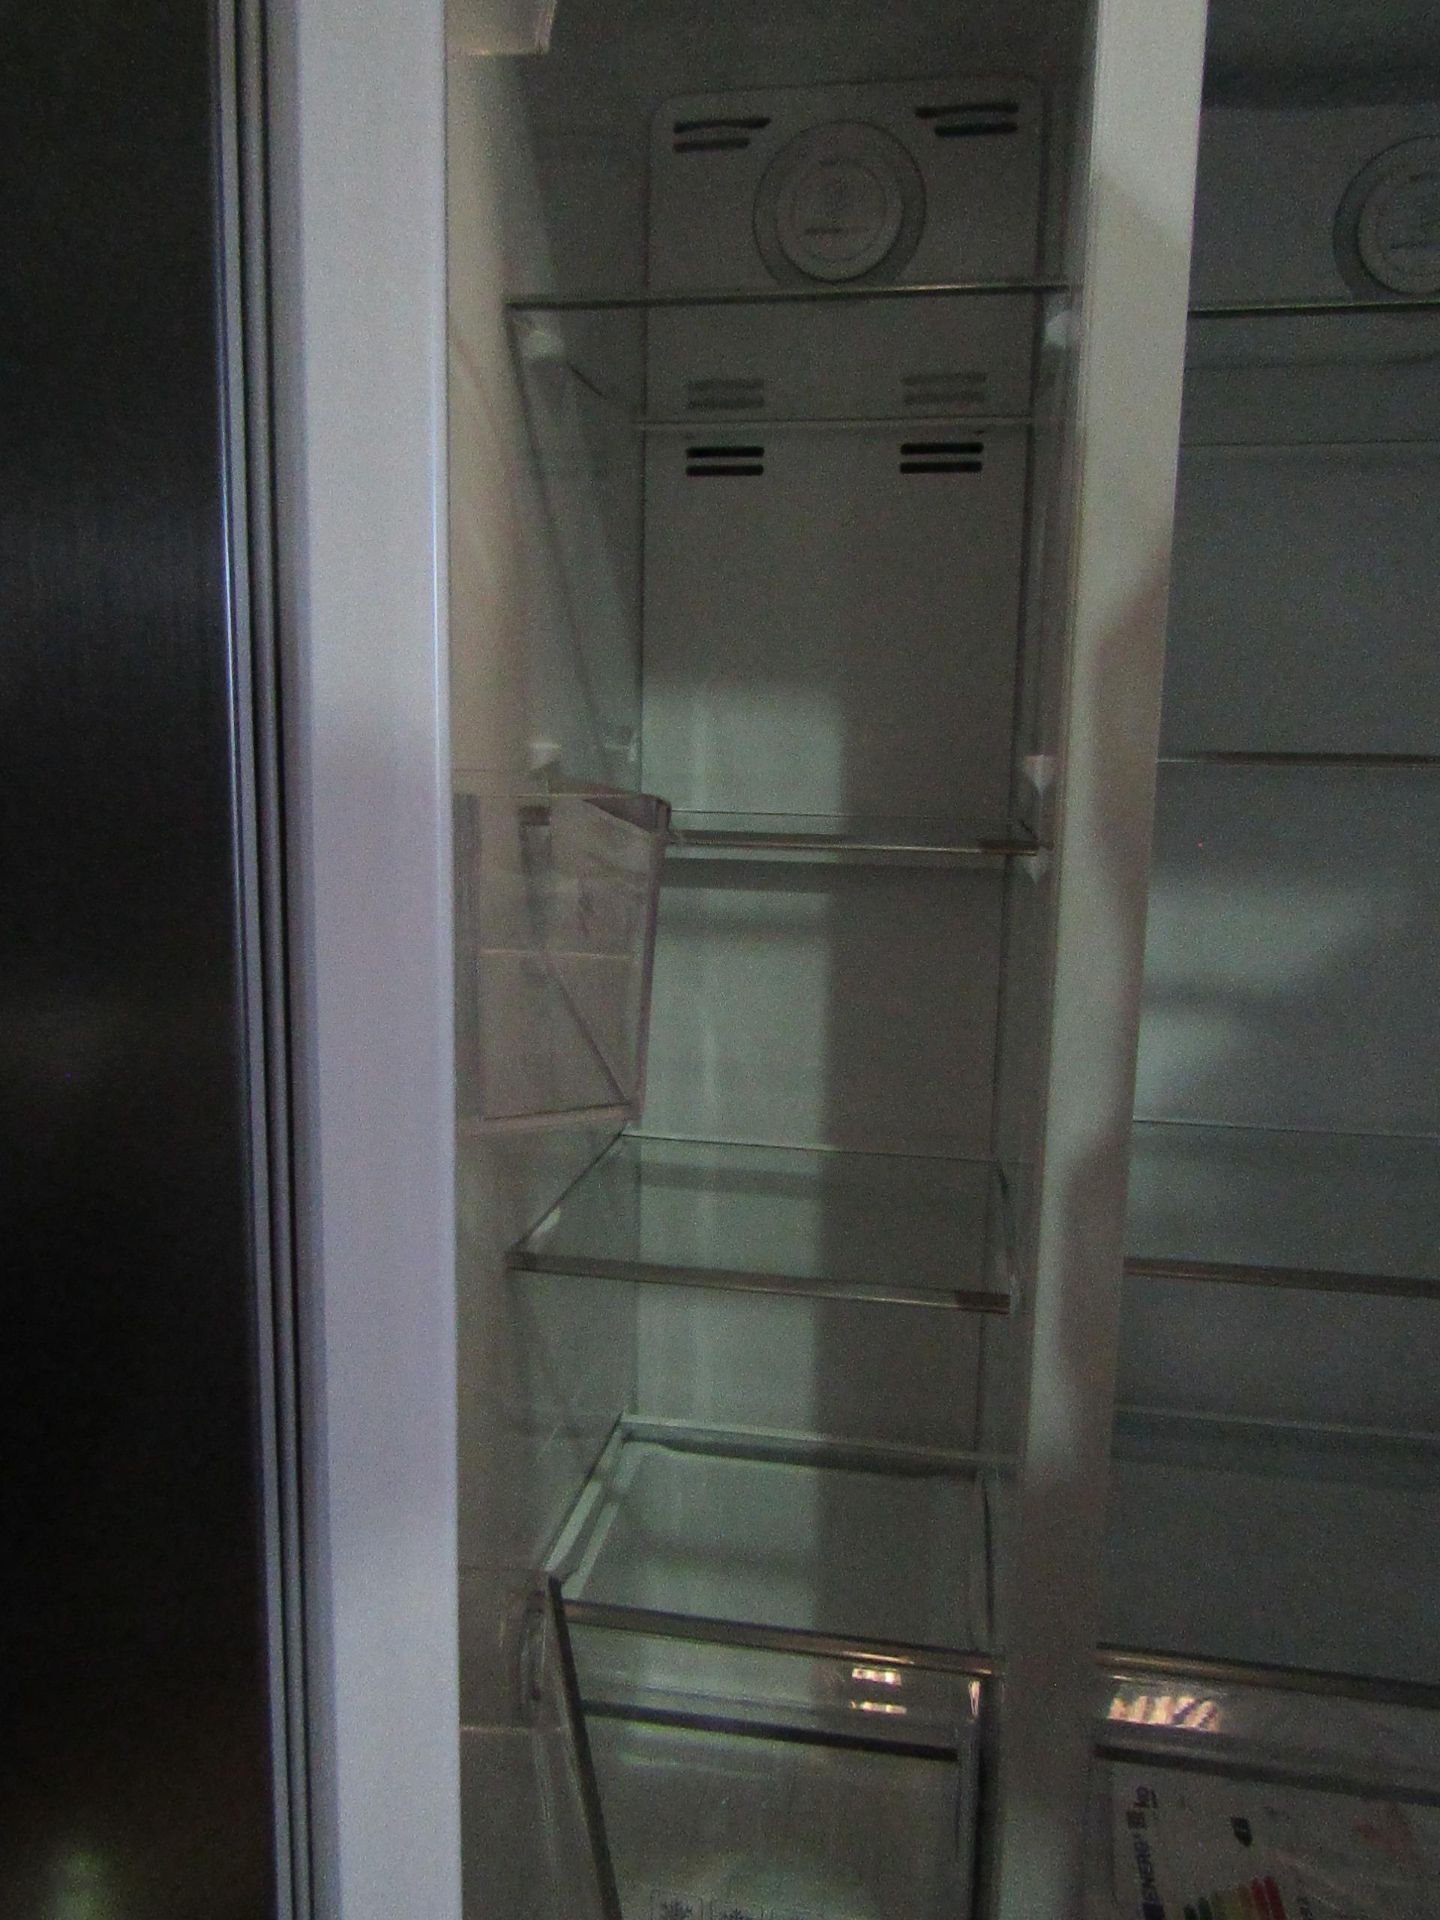 Beko American style fridge freezer, tested working - Image 3 of 3